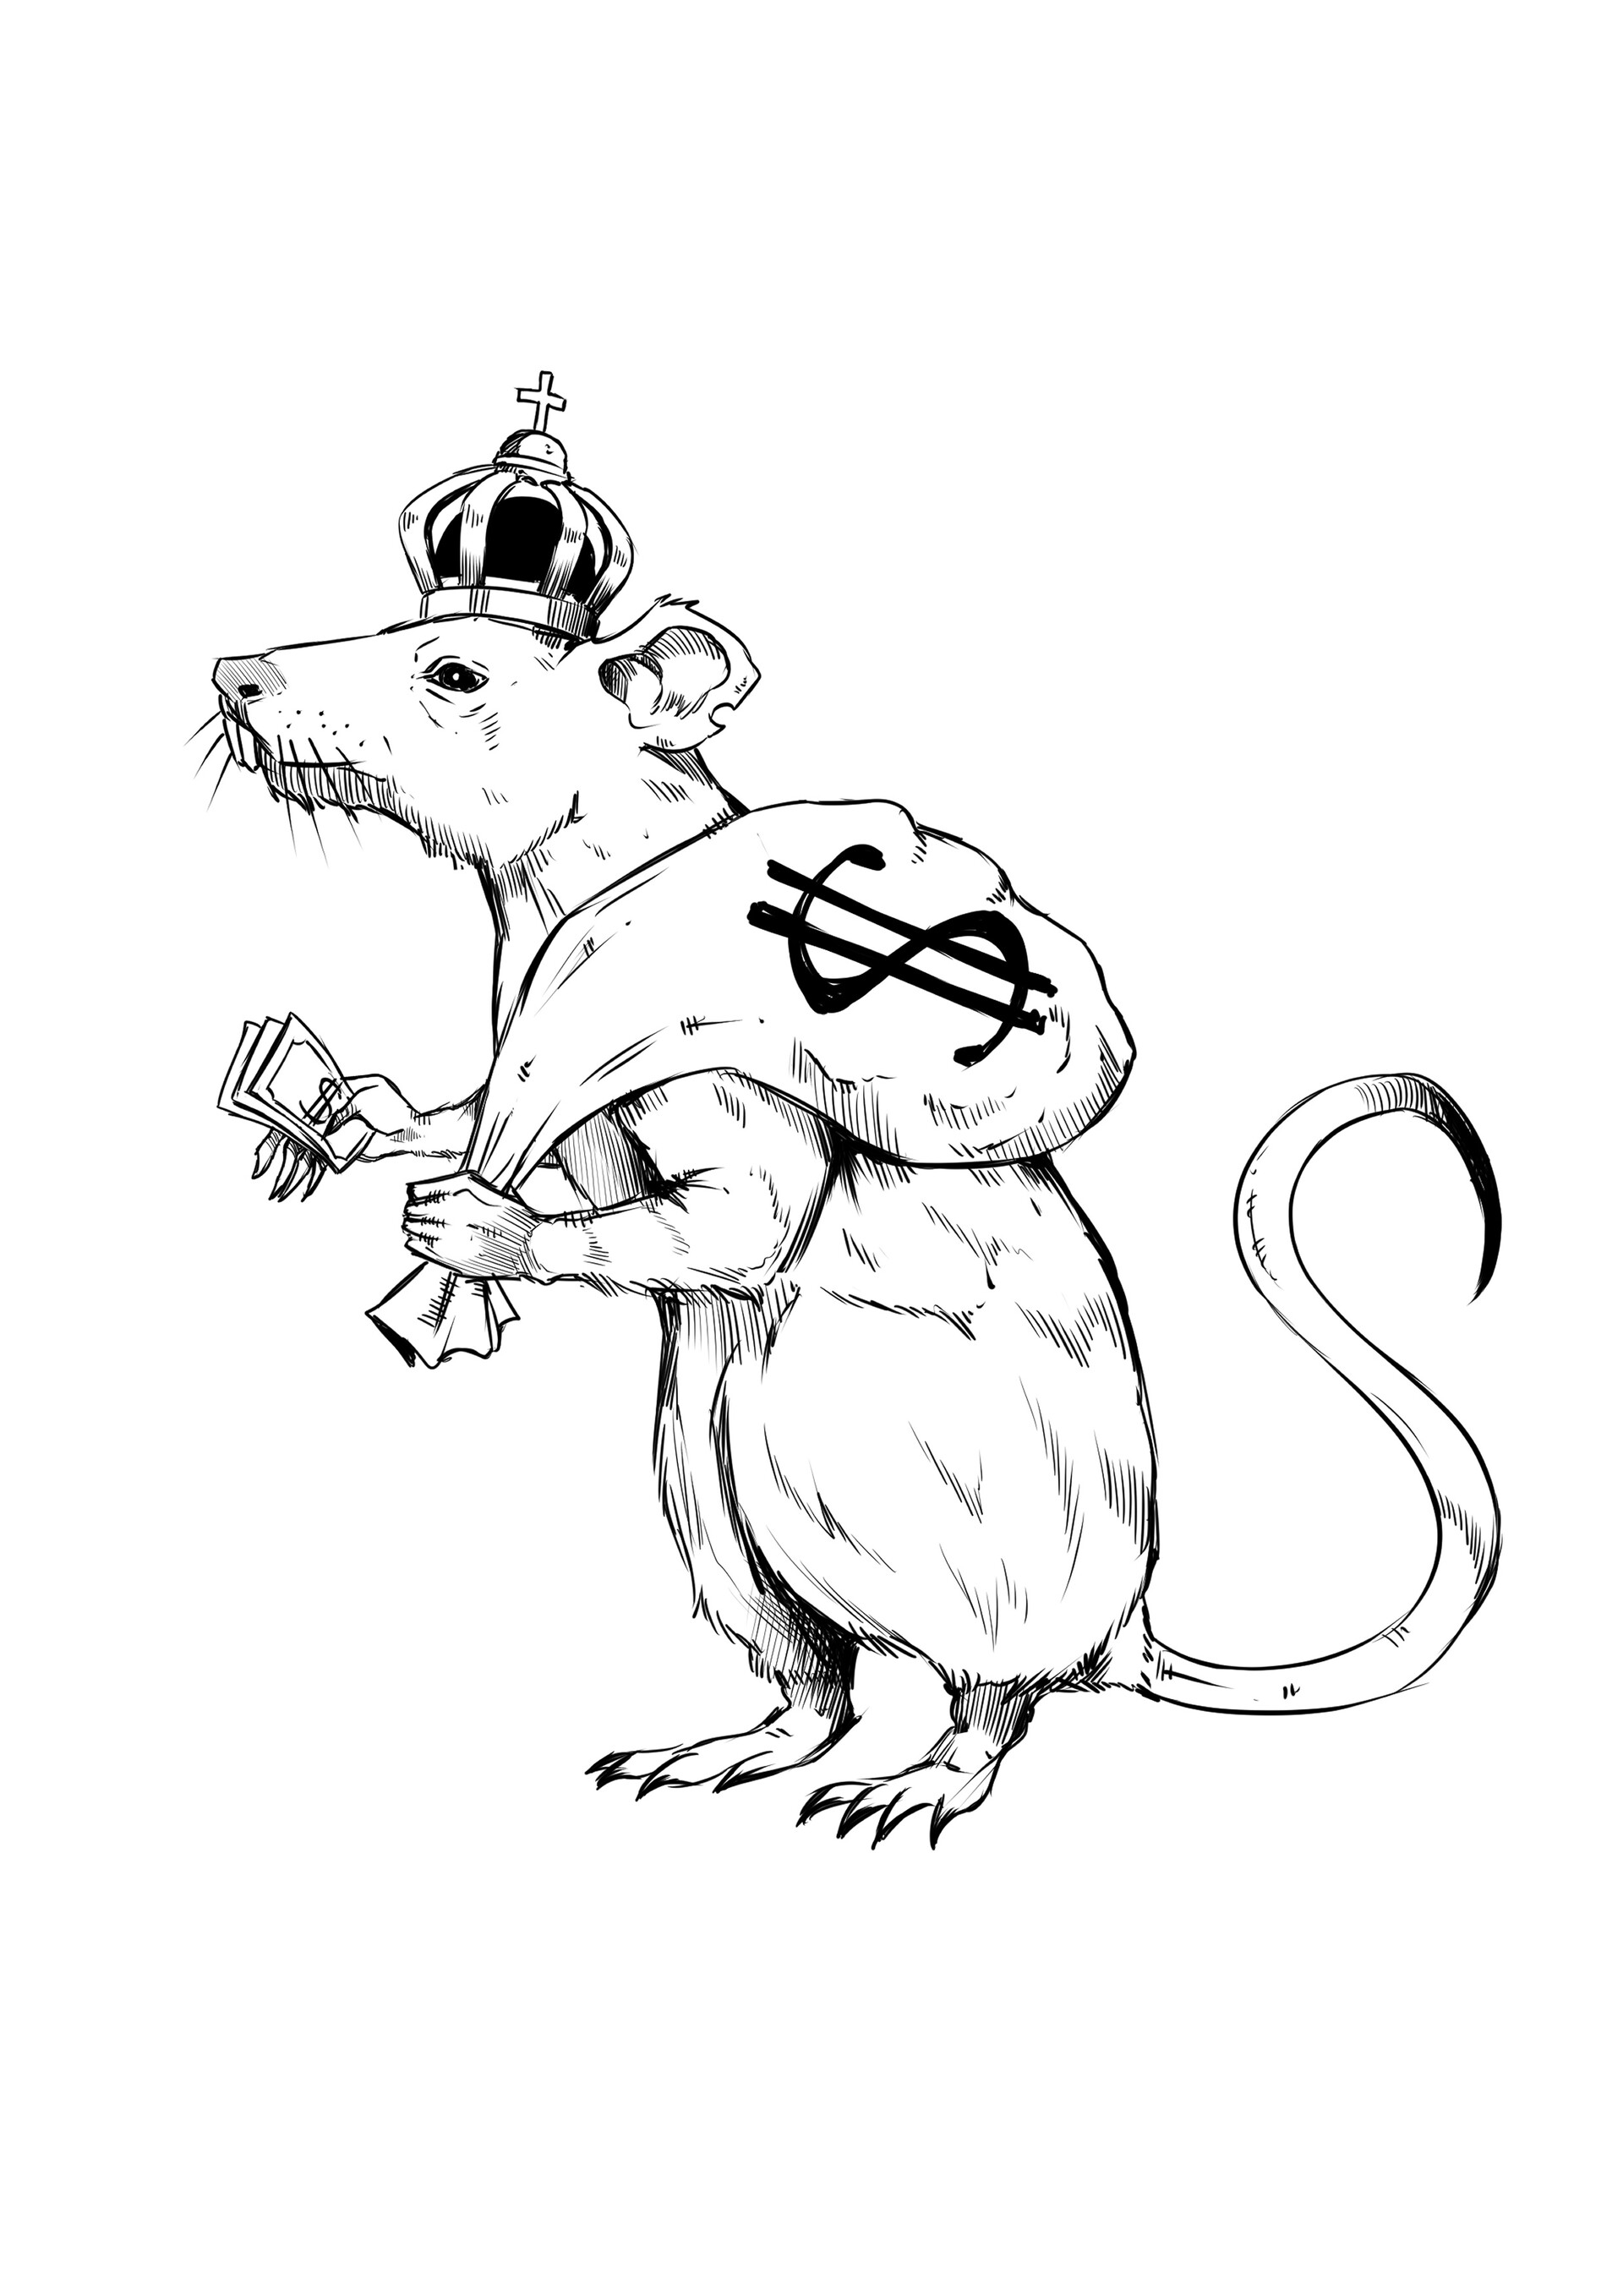 ArtStation - Rat king tattoo